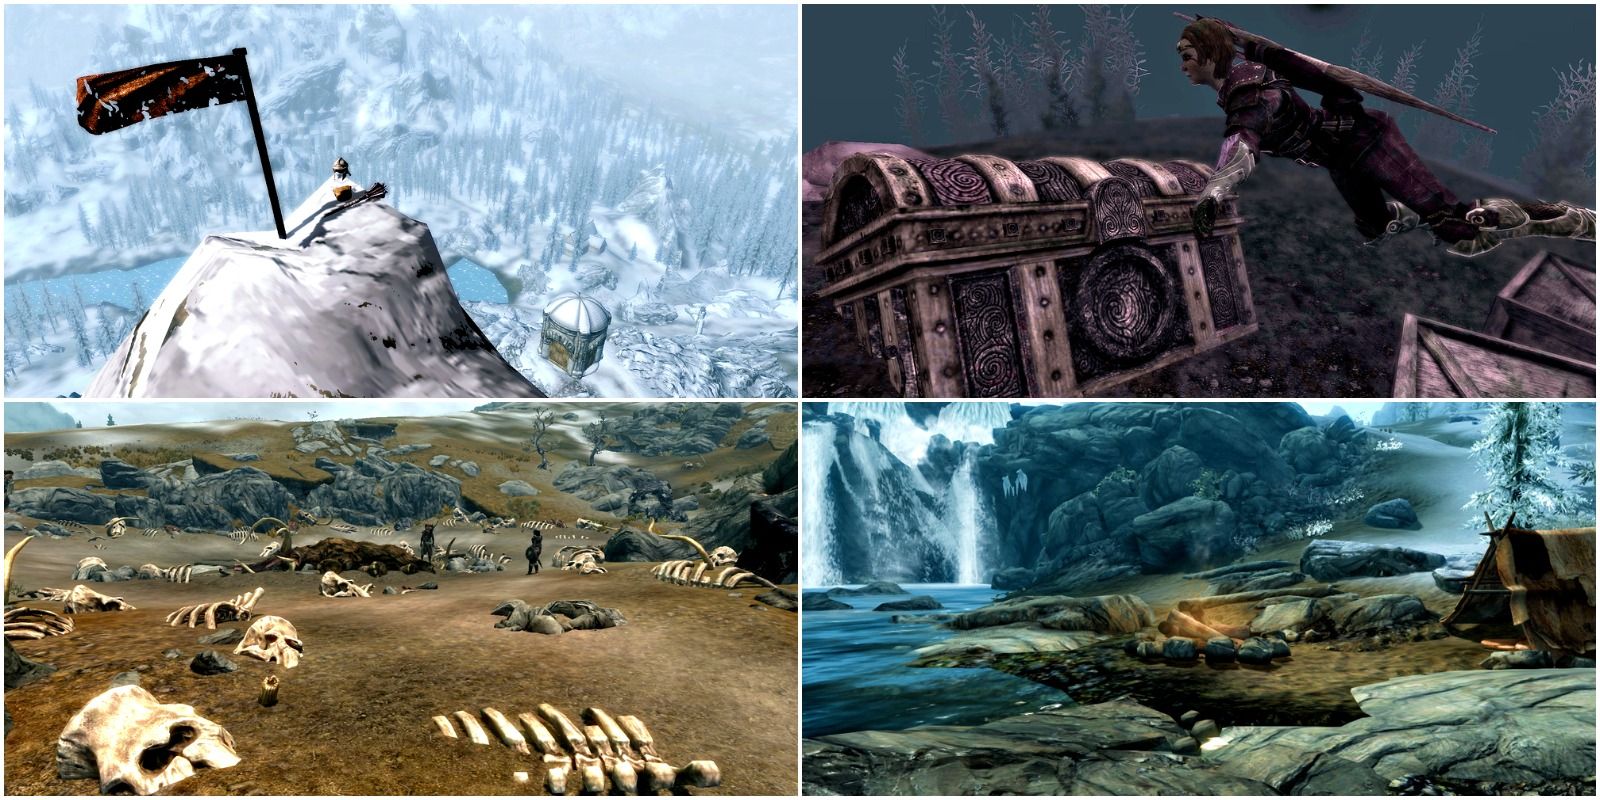 top left: peak of a mountain. top right: sunken treasure. bottom right: waterfall campsite. bottom left: mammoth graveyard